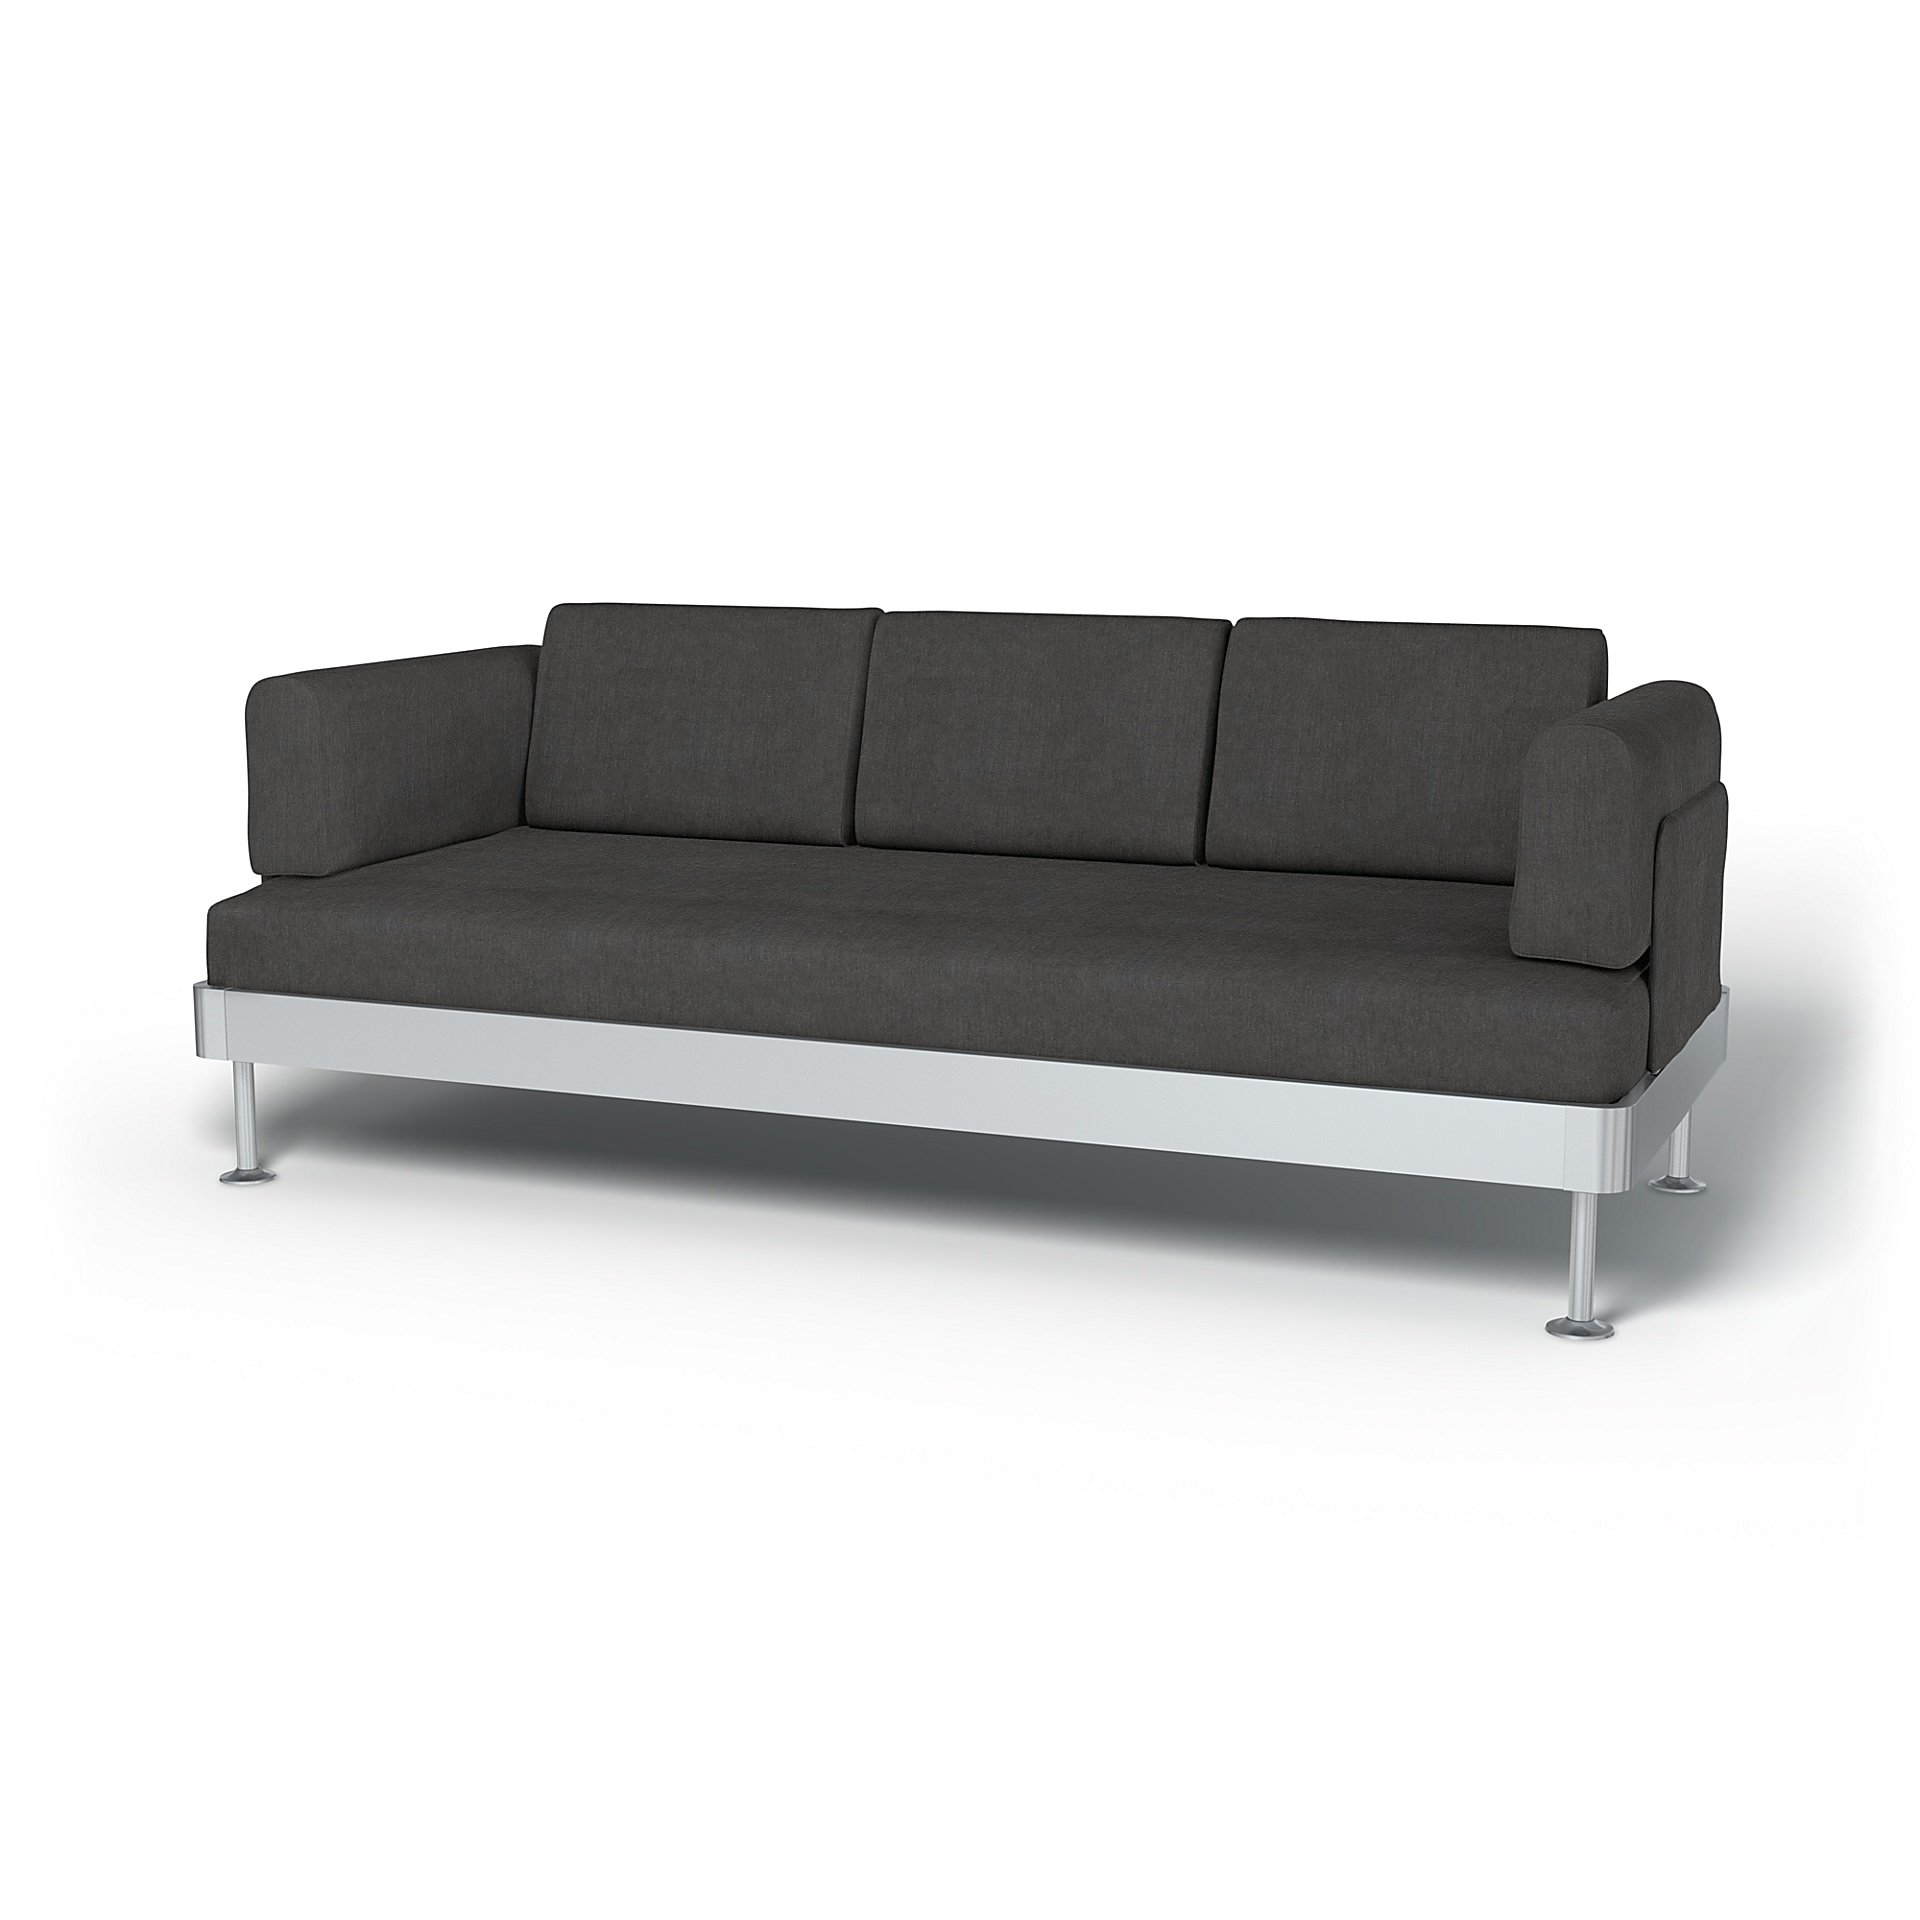 IKEA - Delaktig 3 Seater Sofa Cover, Espresso, Linen - Bemz